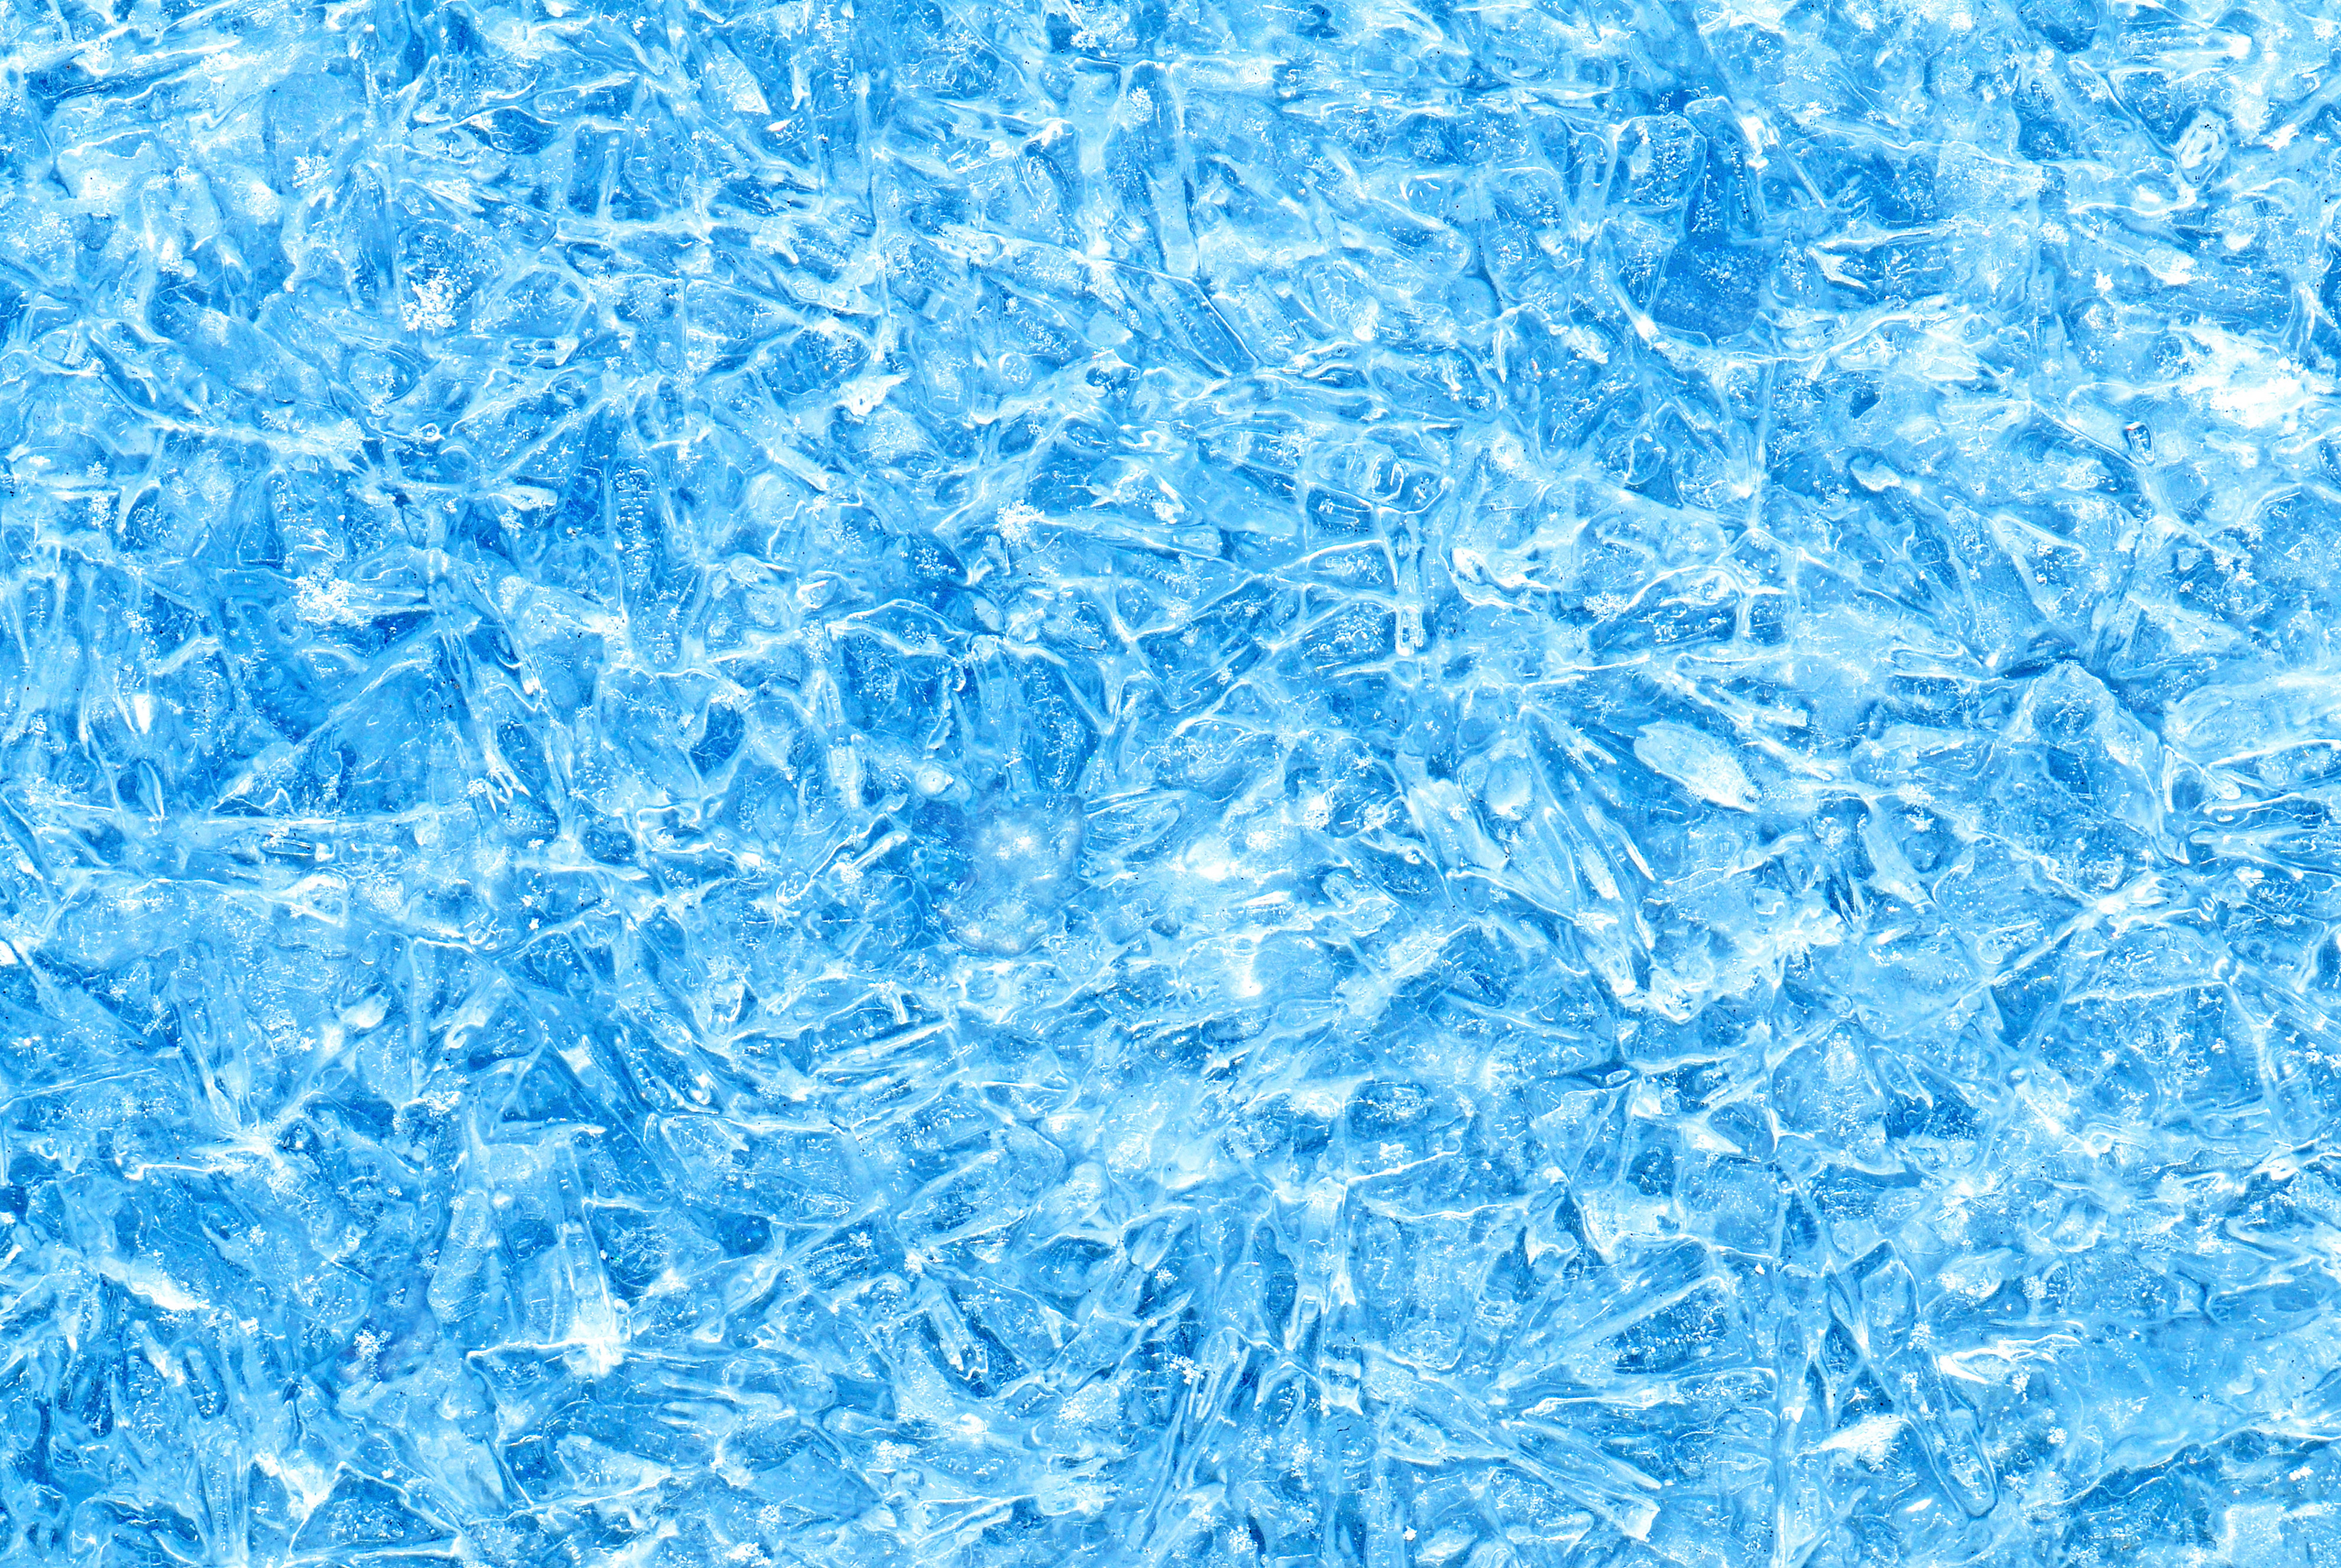 Texture ice ice download photo frozen water download texture ice